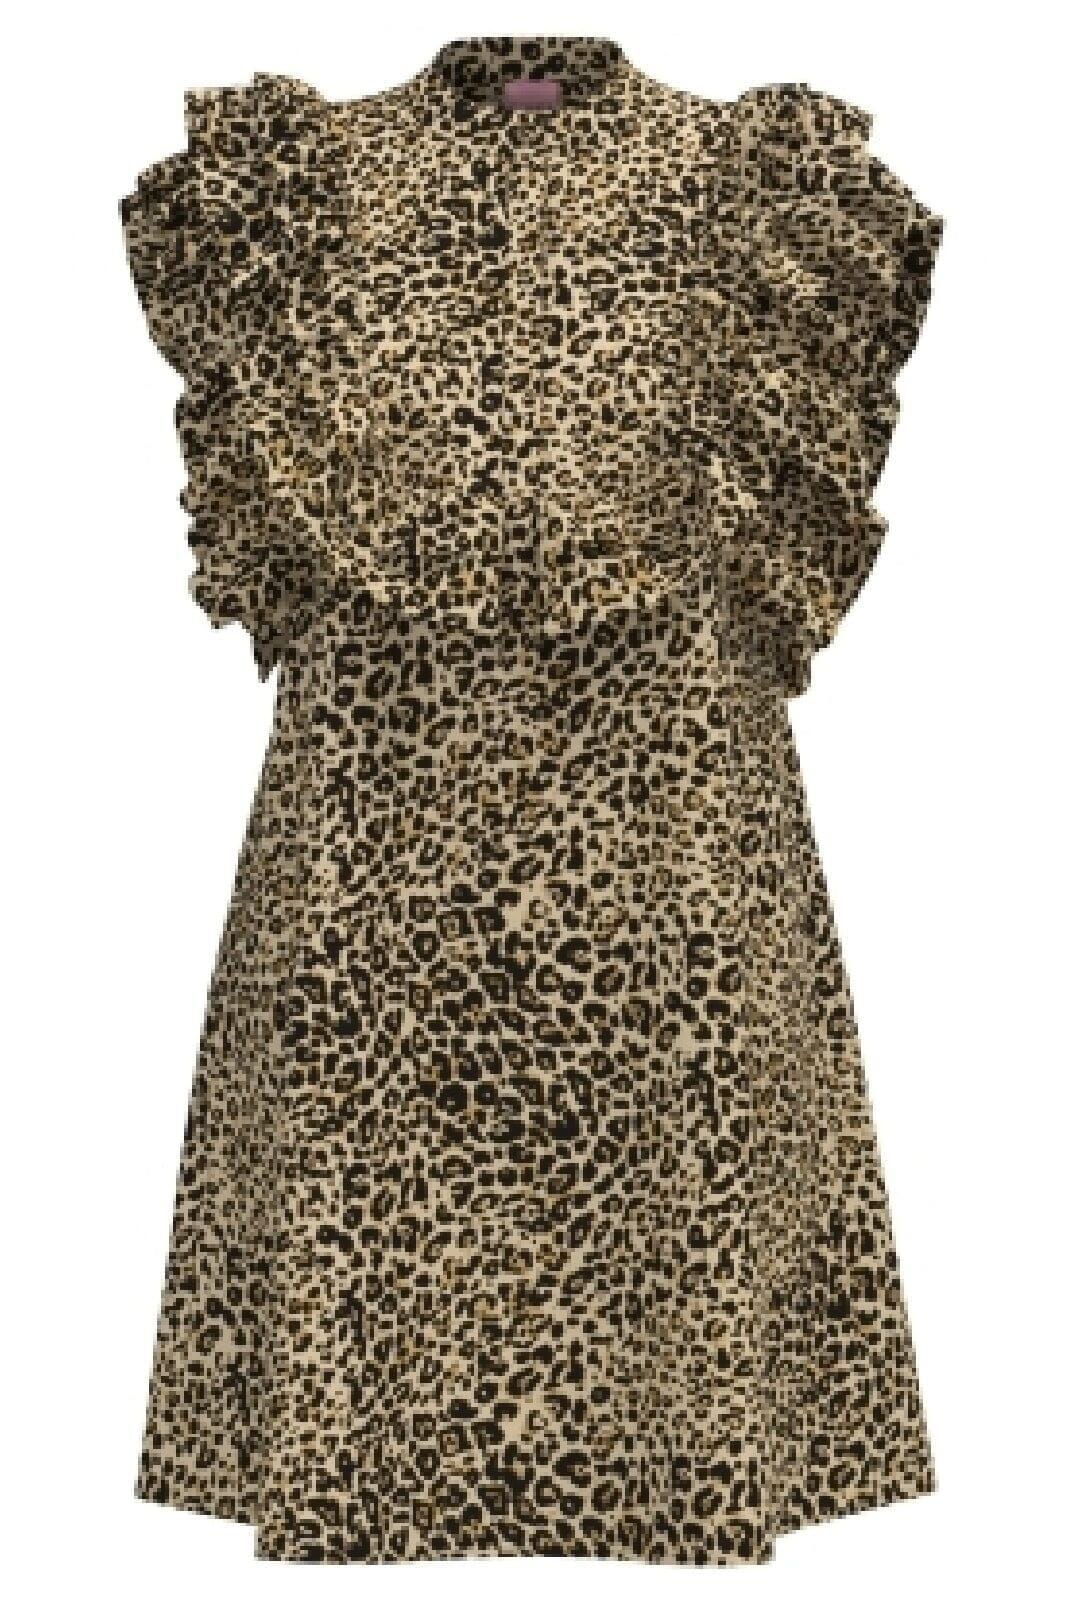 Gossia - Mussego Dress - Leopard Print Kjoler 